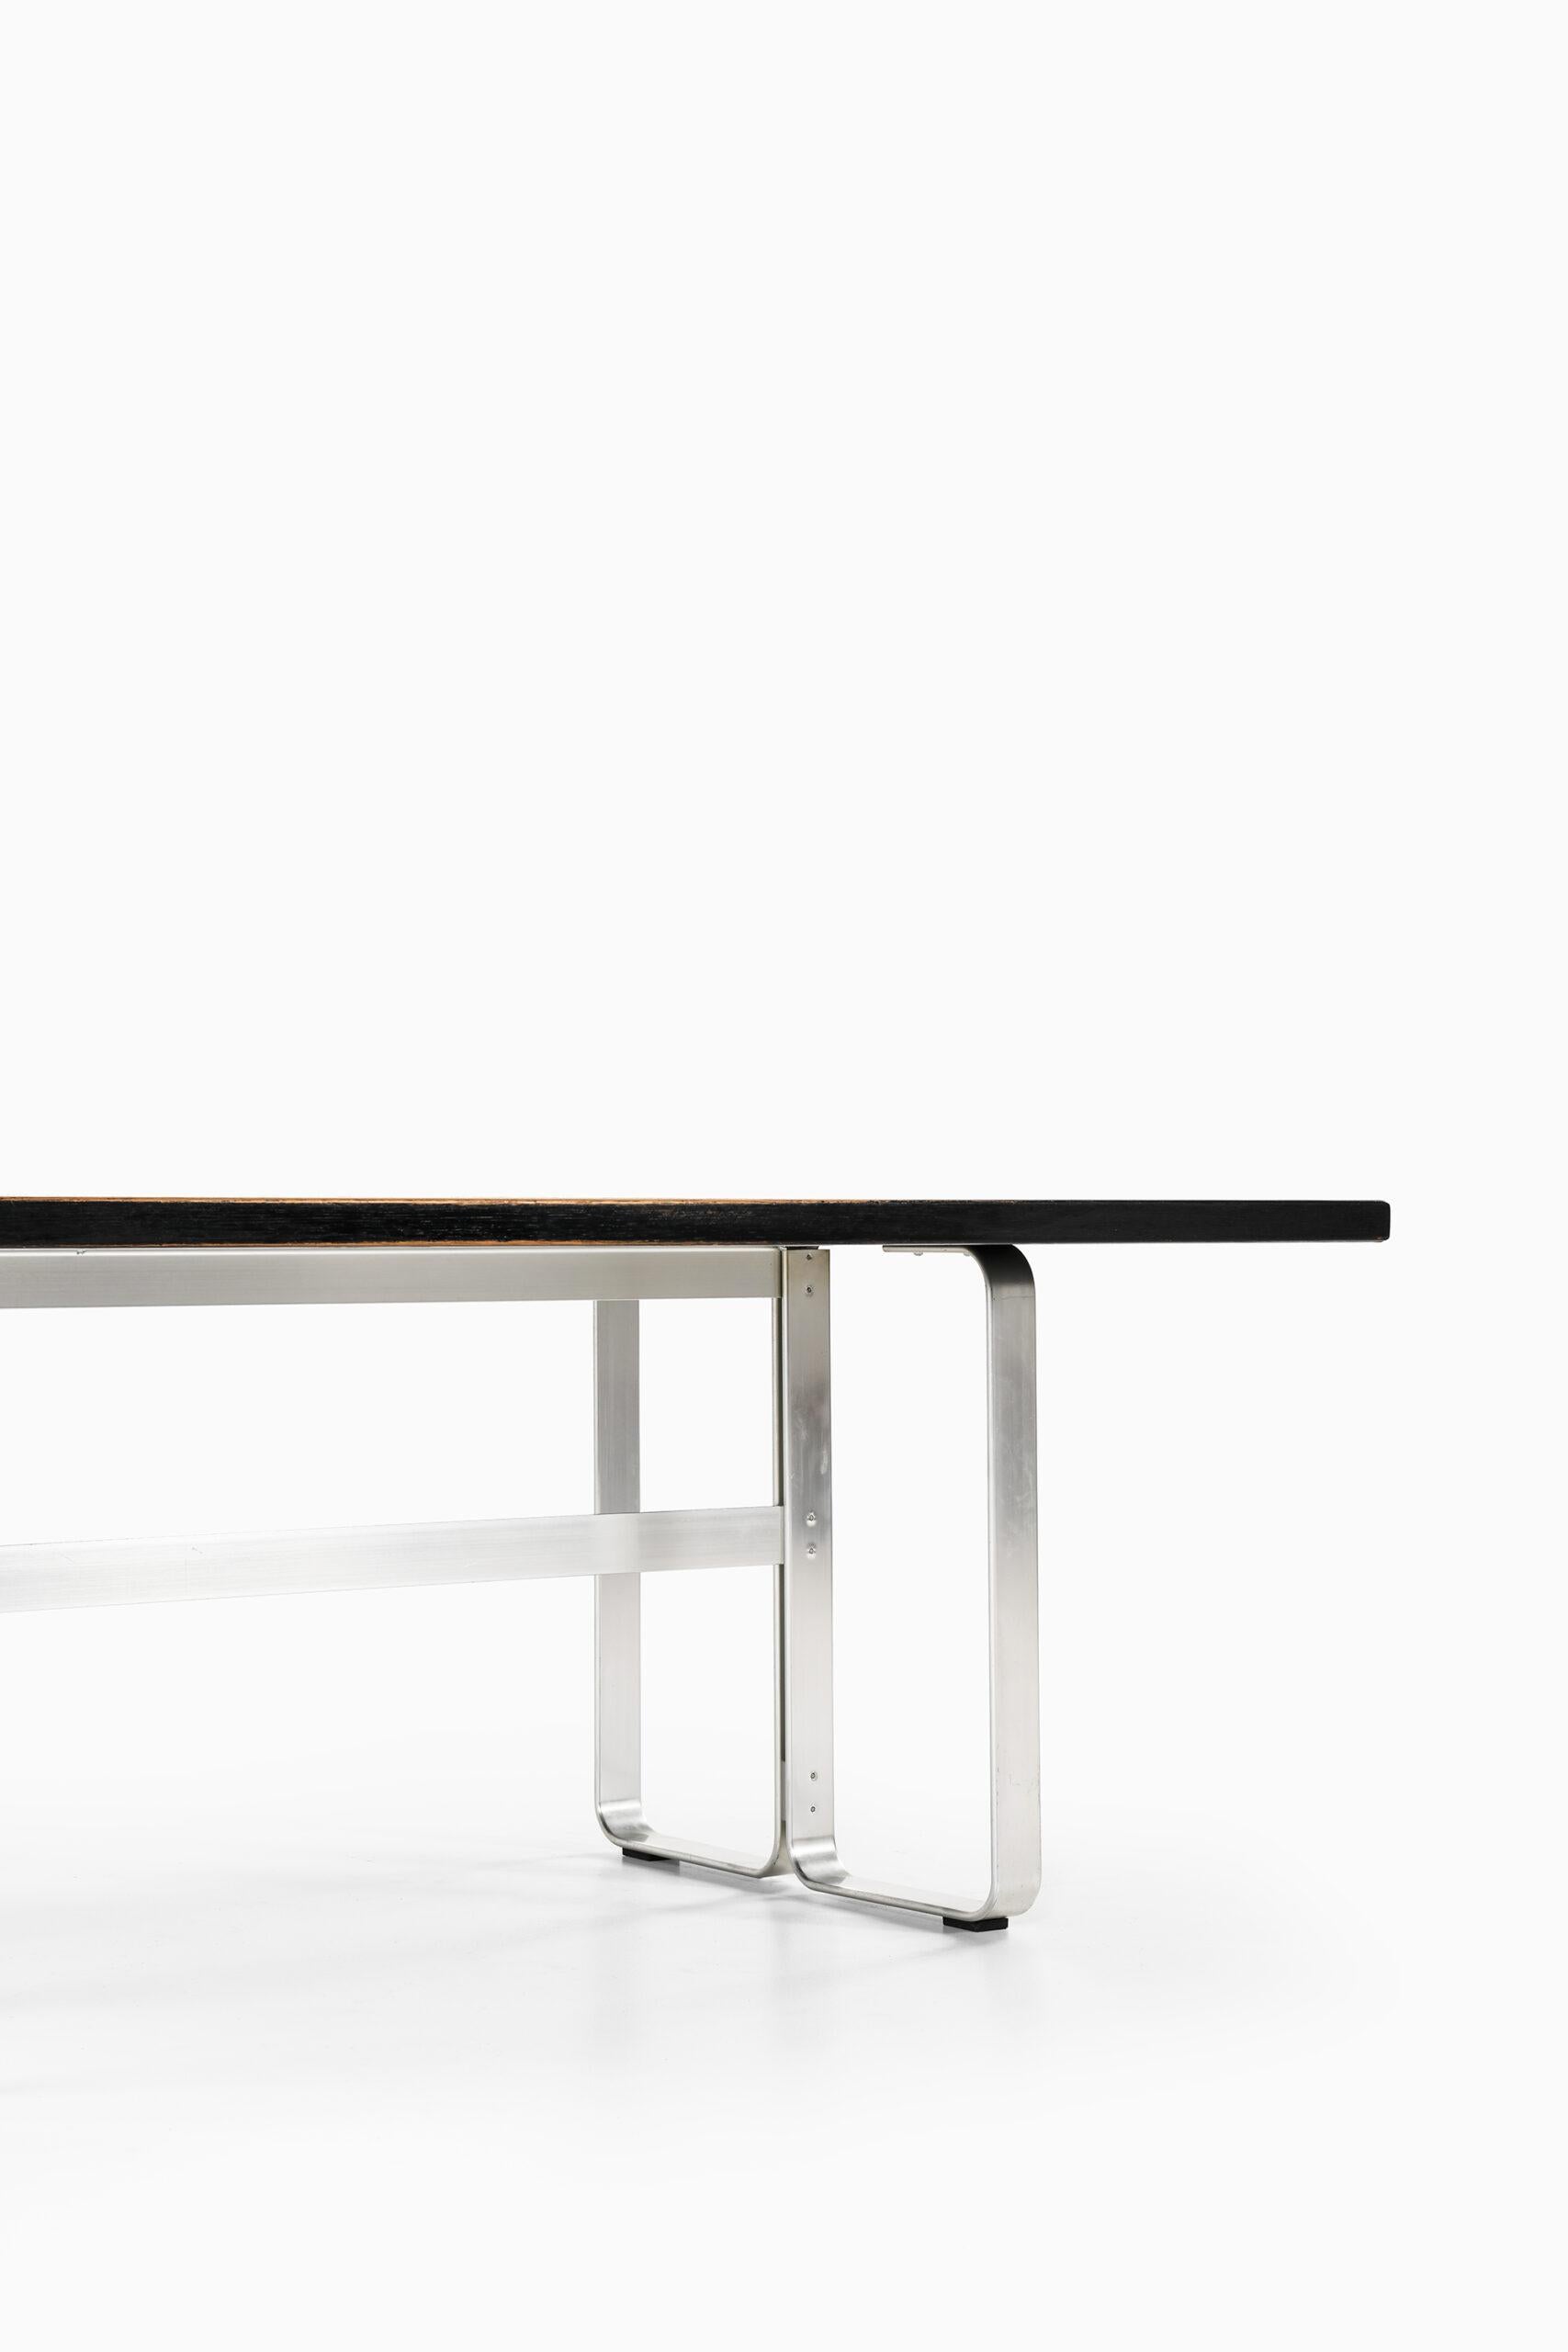 Rare and large desk / dining table designed by Karl-Erik Ekselius. Produced by JOC in Vetlanda, Sweden.